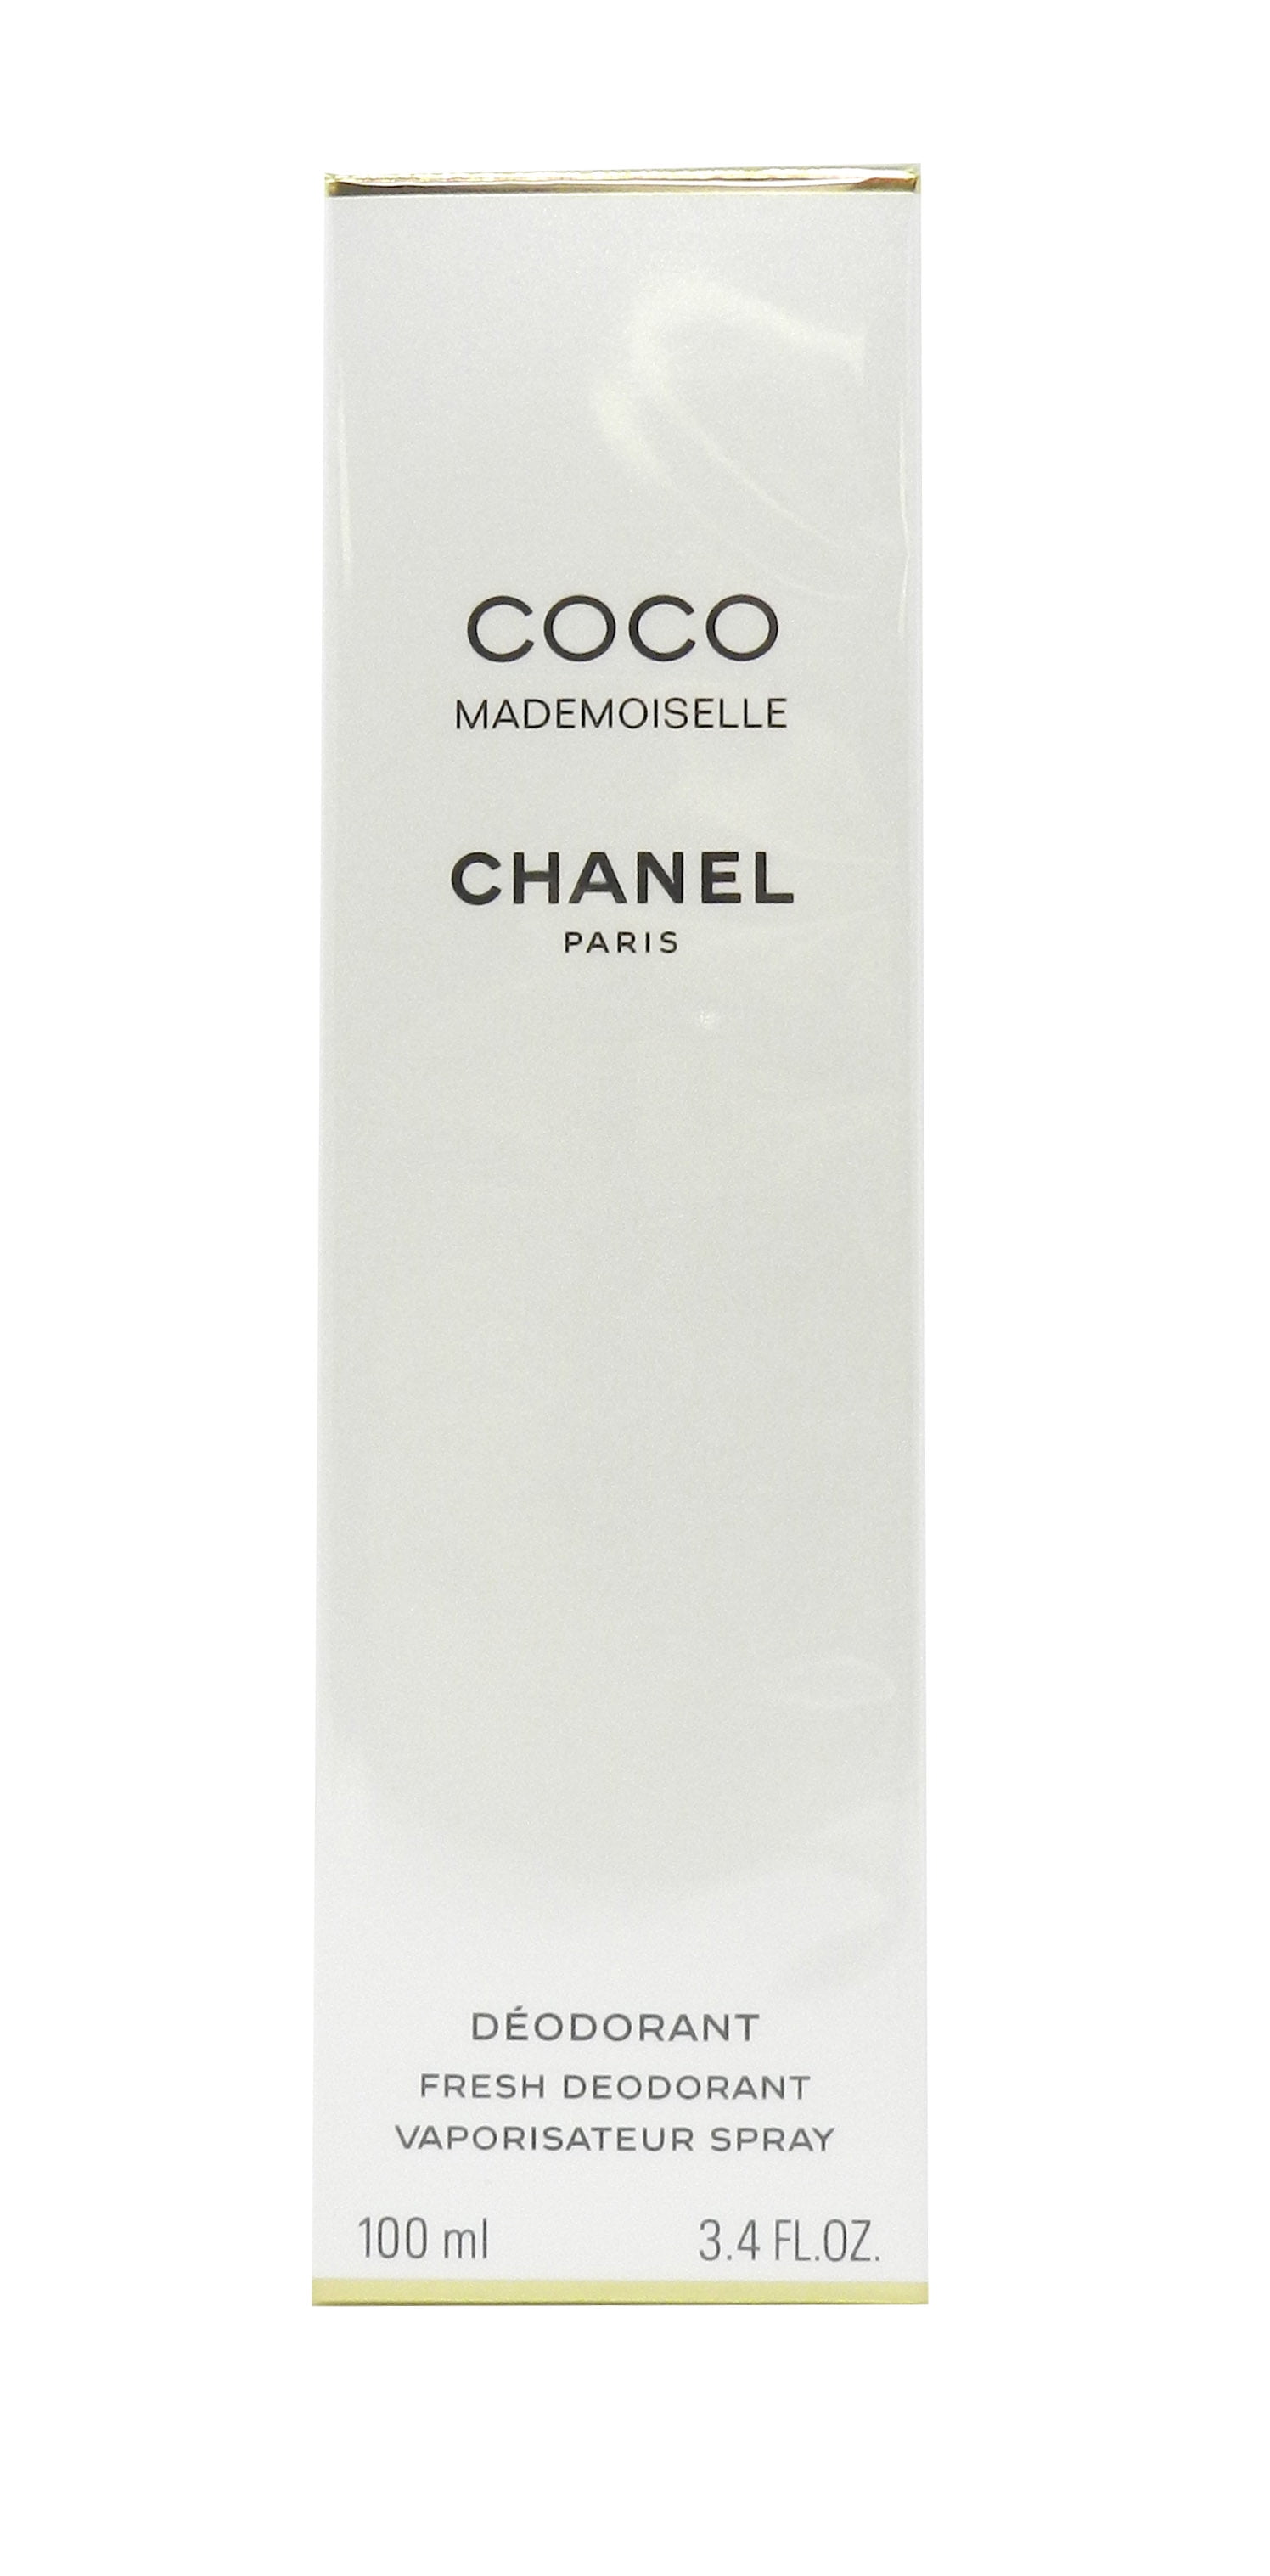 Chanel Coco Mademoiselle Deodorant 3.4 Ounces Walmart.com